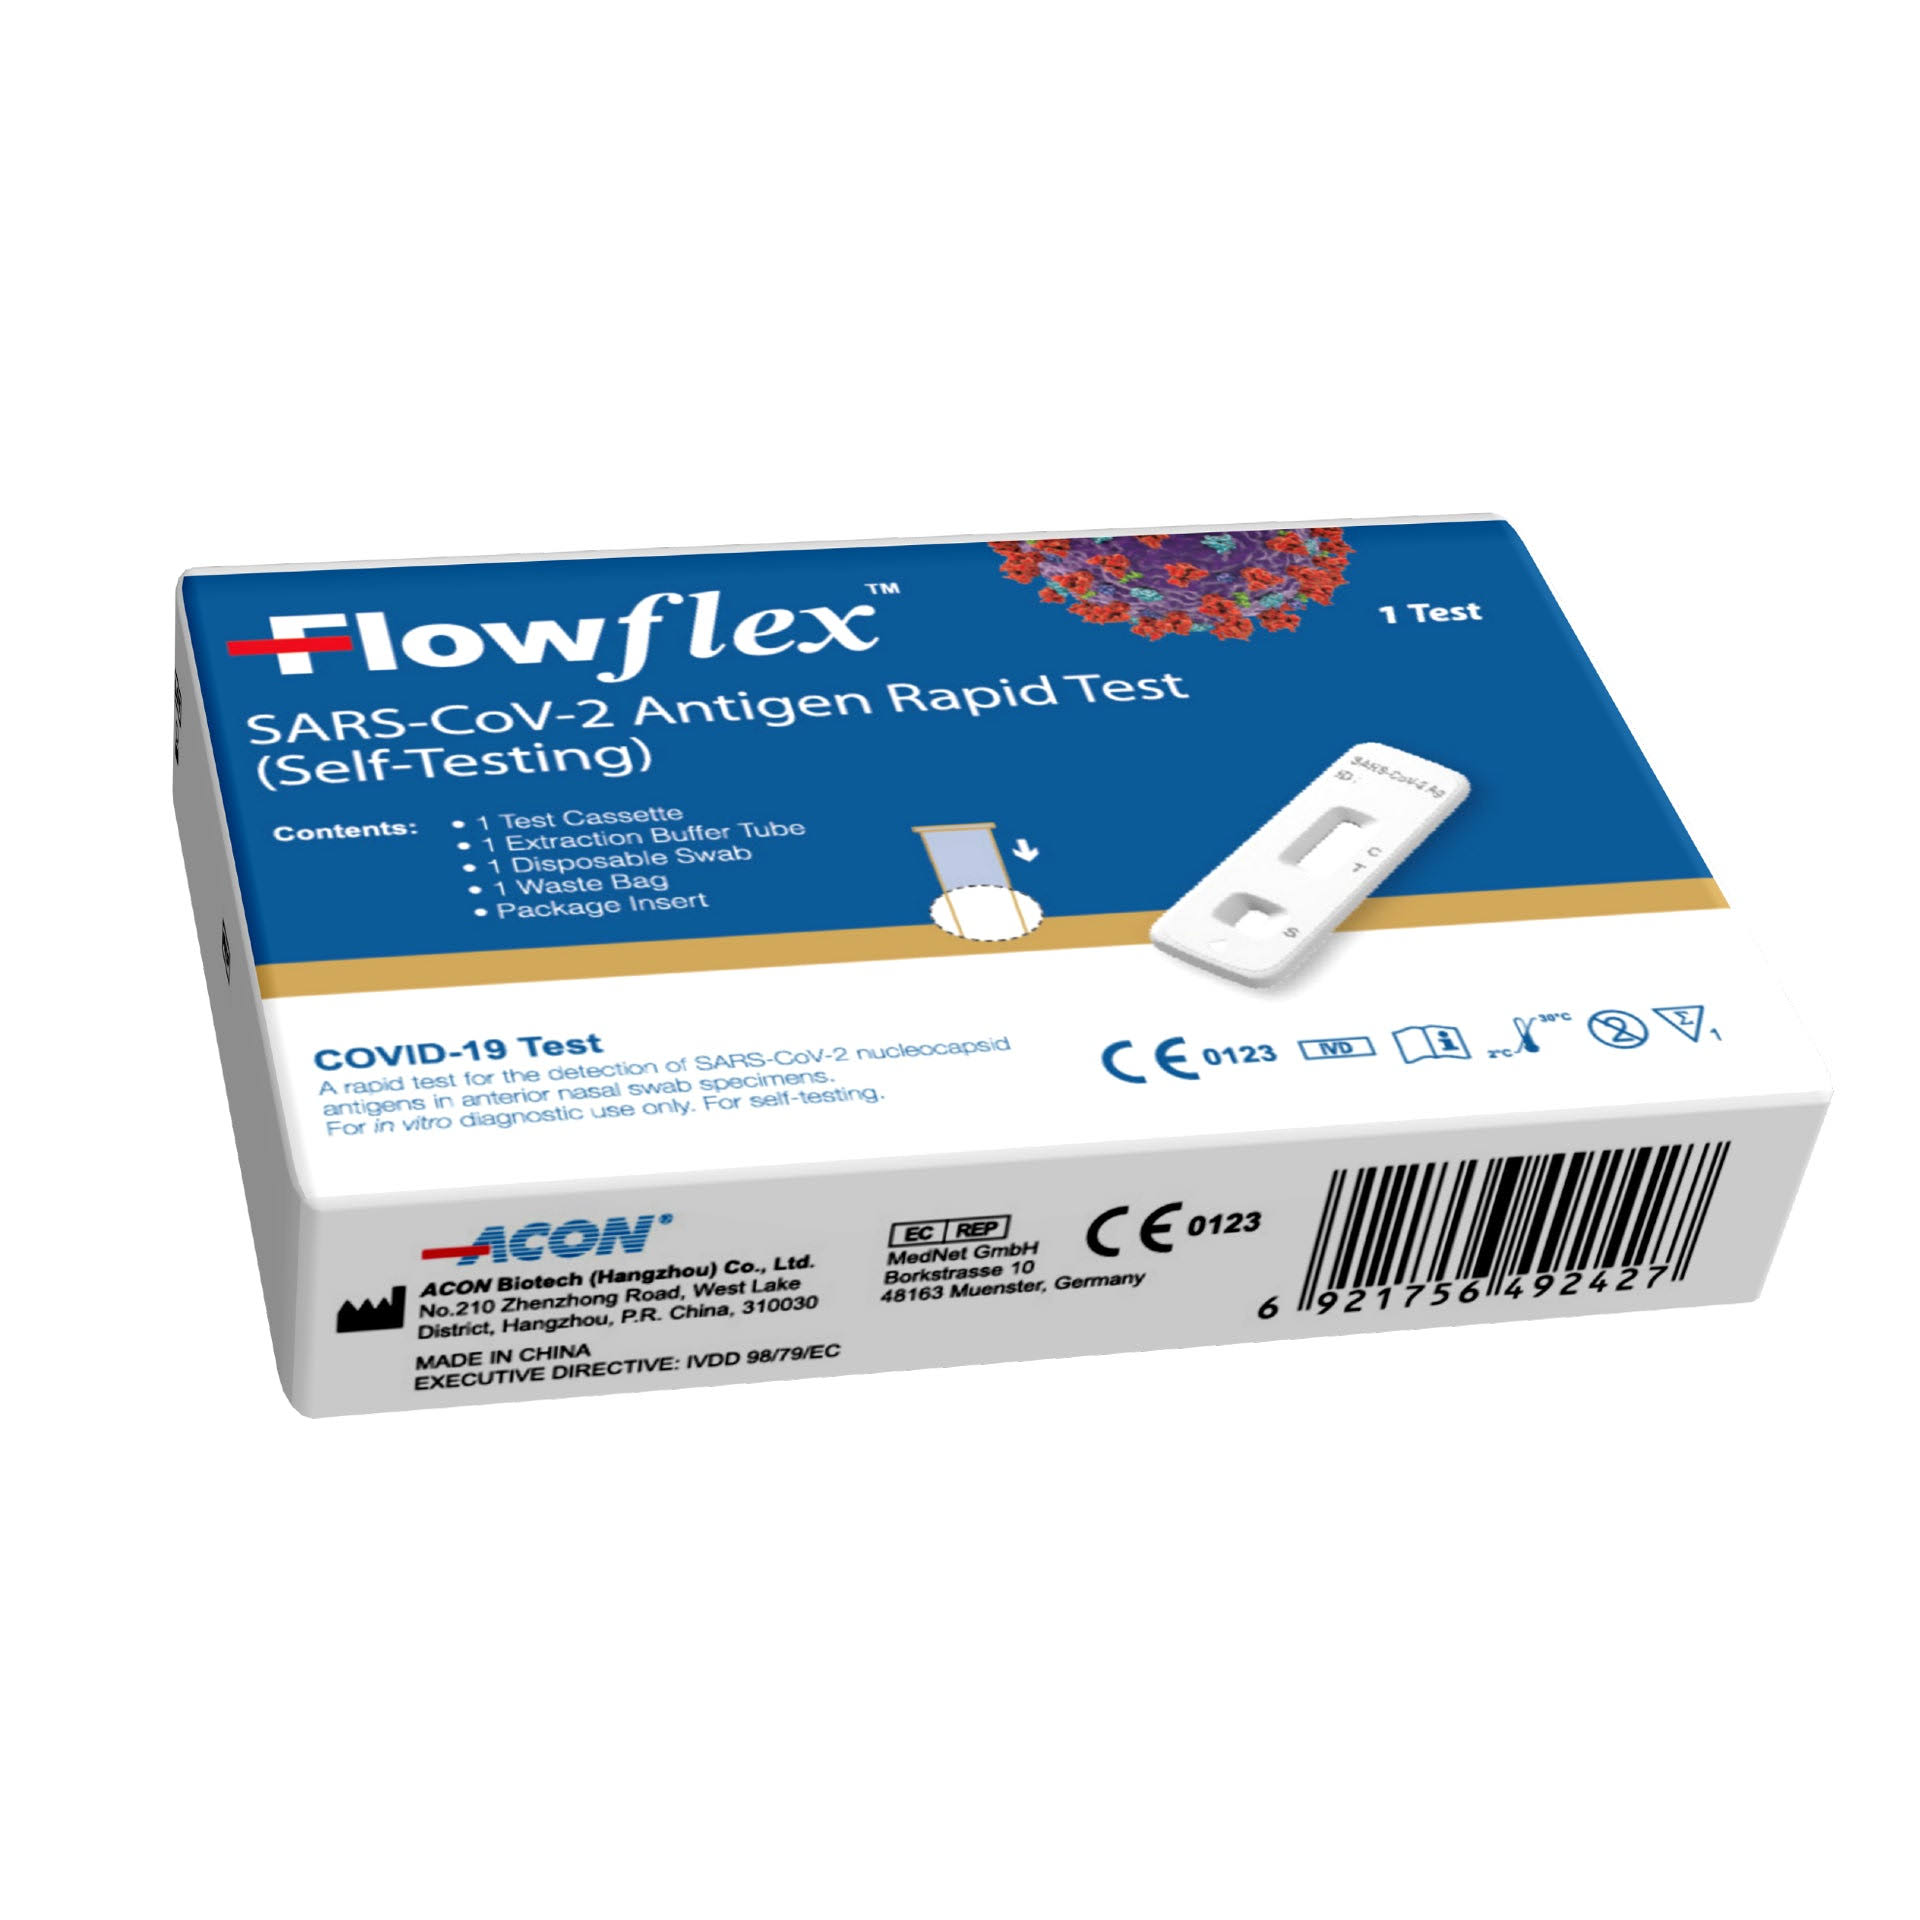 Flowflex Rapid Lateral Flow Covid-19 Antigen Test